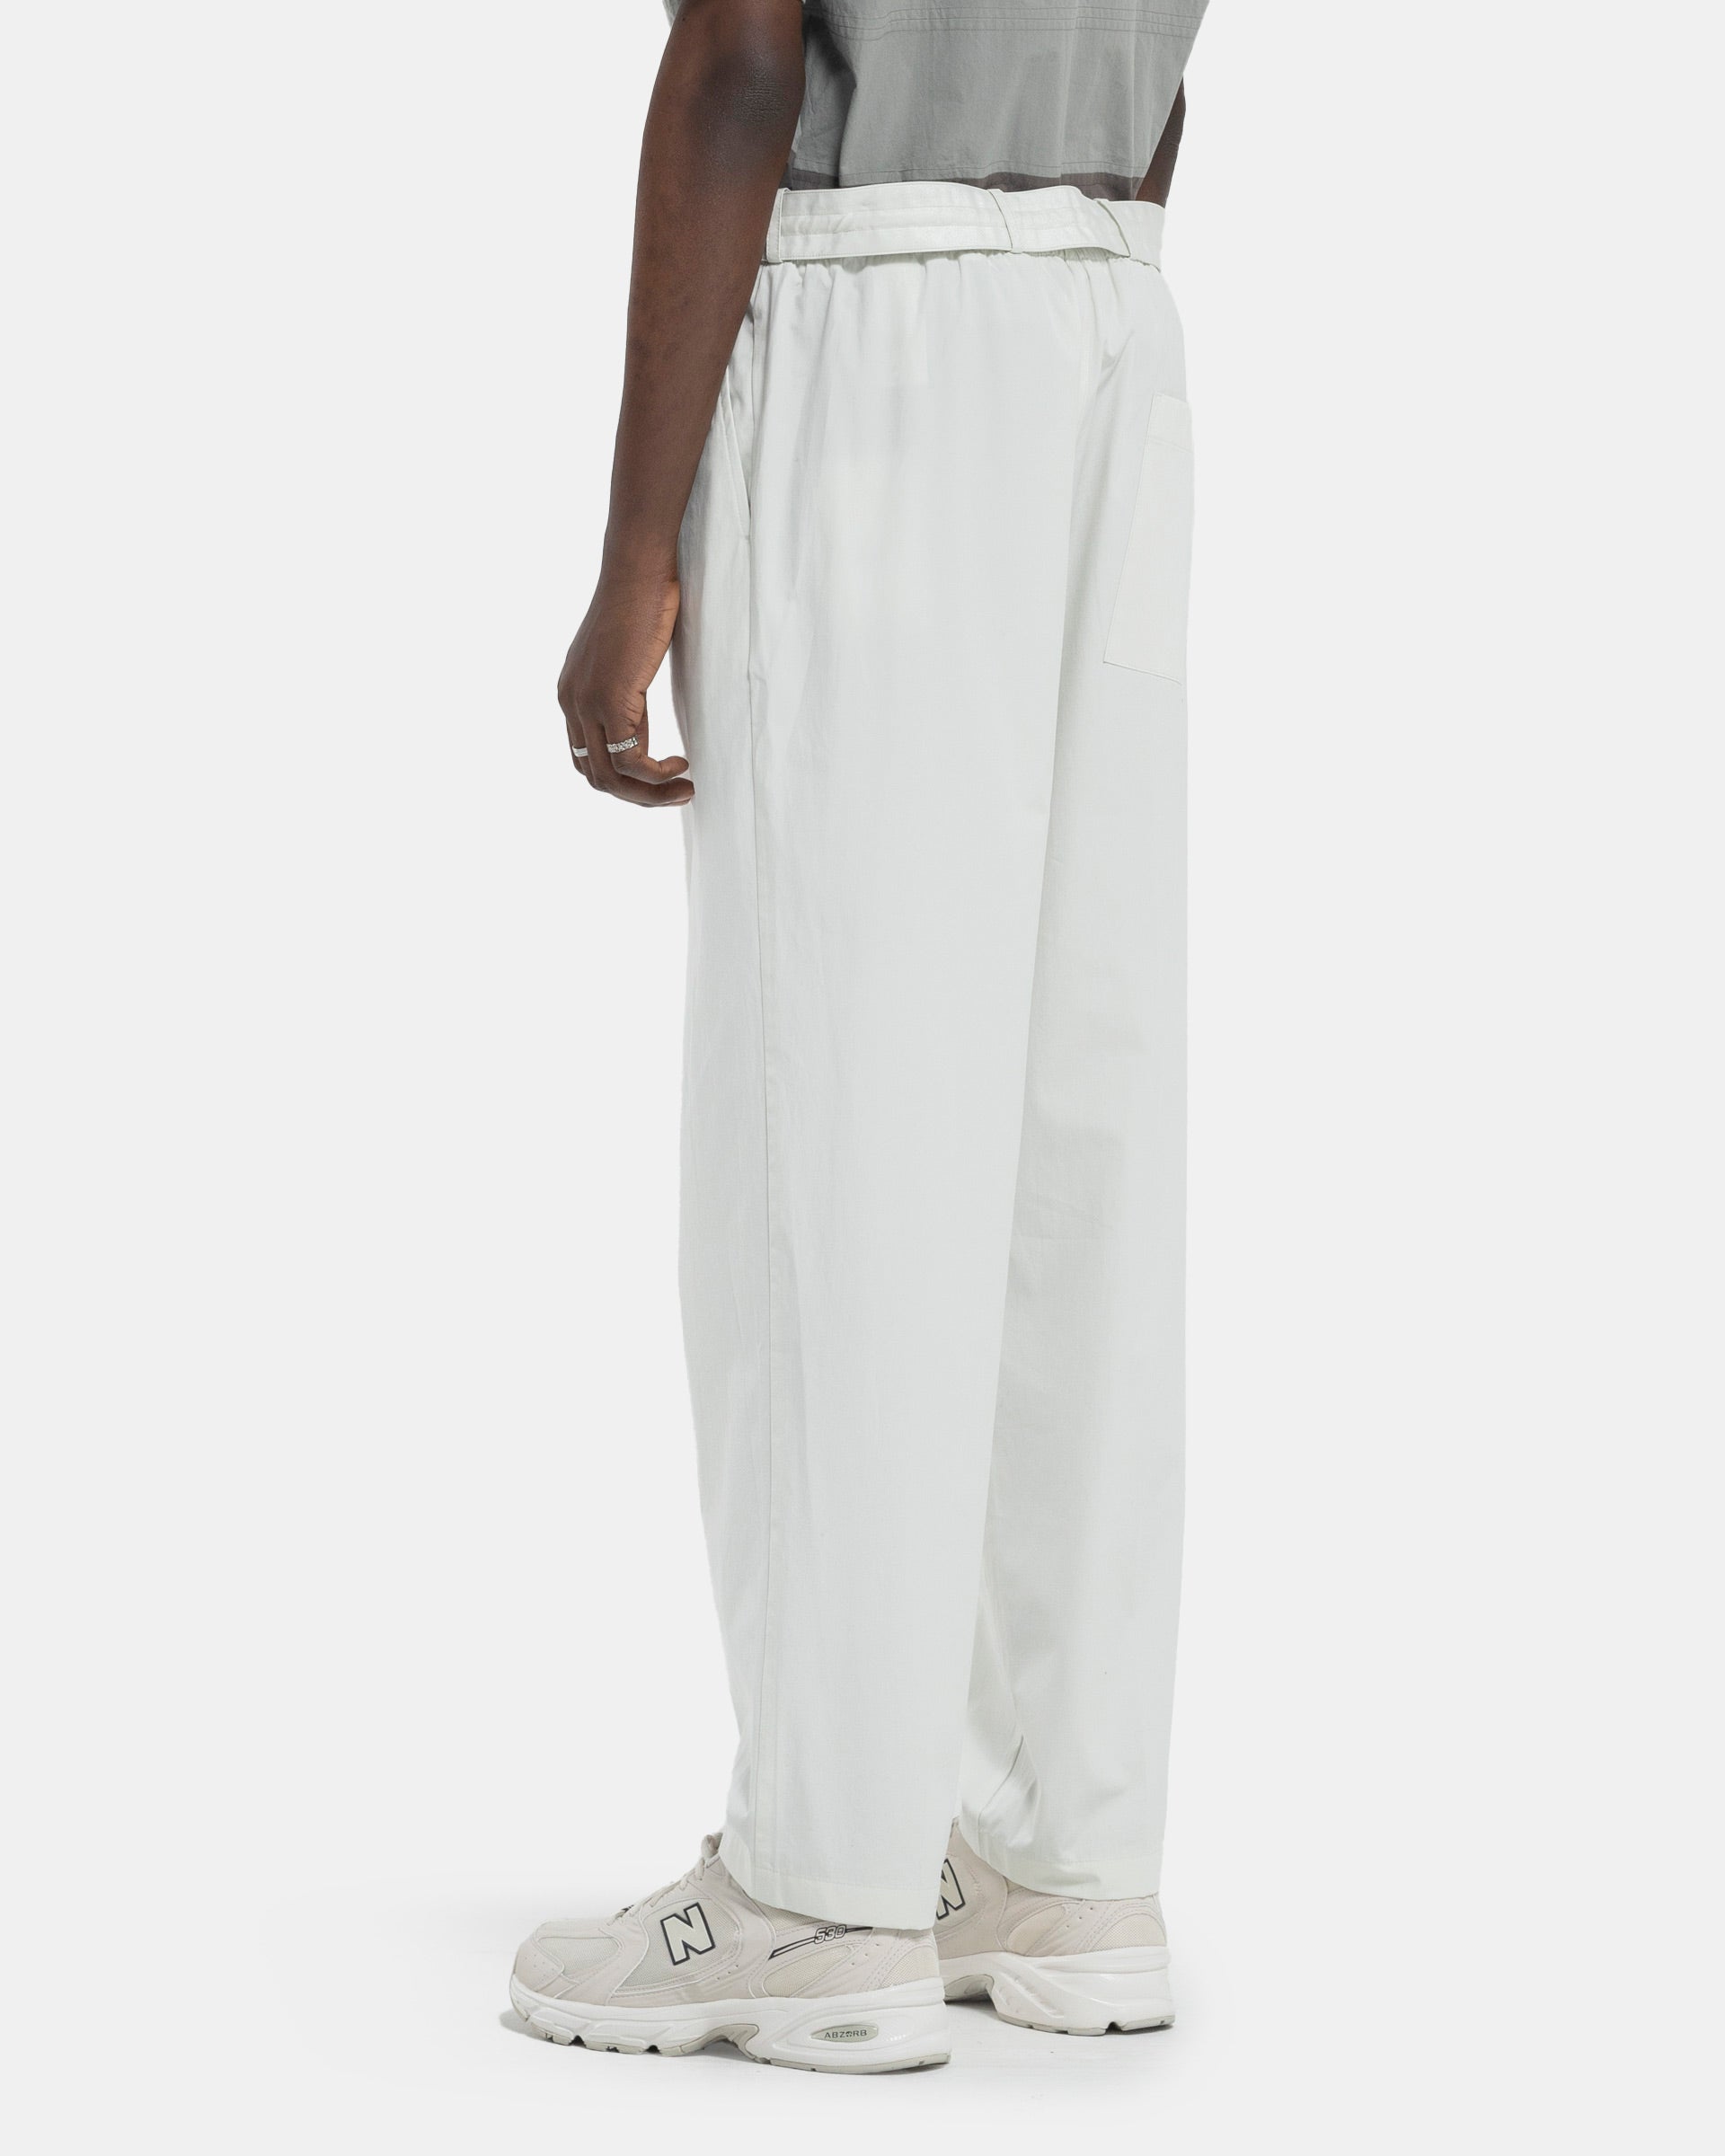 Model wearing Craig Green Circle Worker Trouser in Ecru on white background